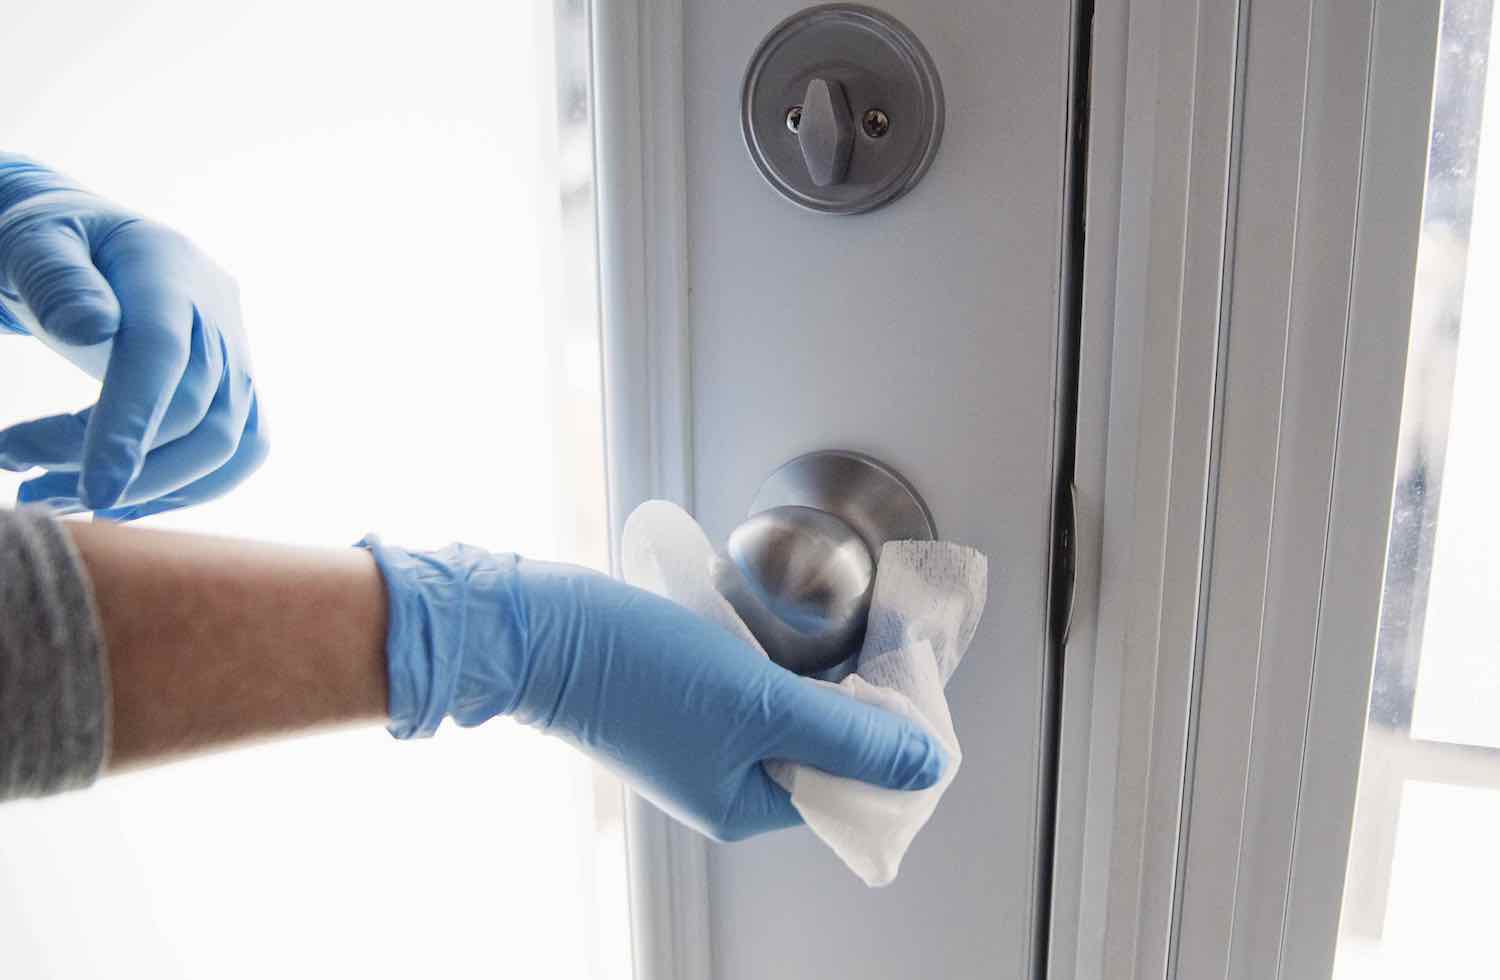 A person sanitizing a doorknob.